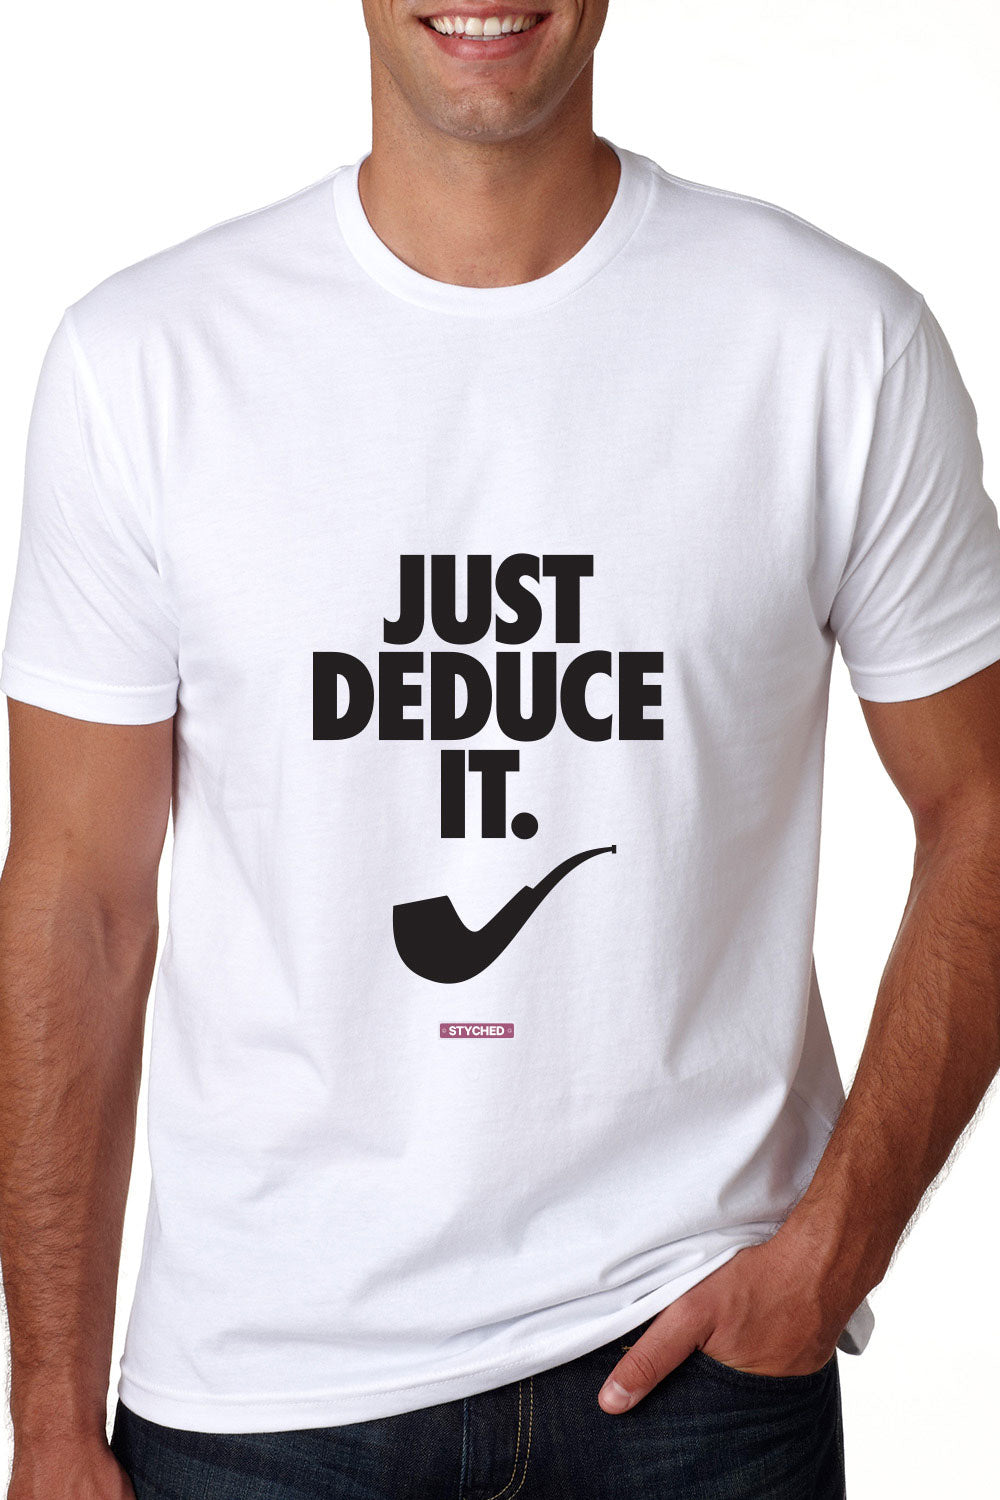 Just Deduce it Graphic T-Shirt White Color